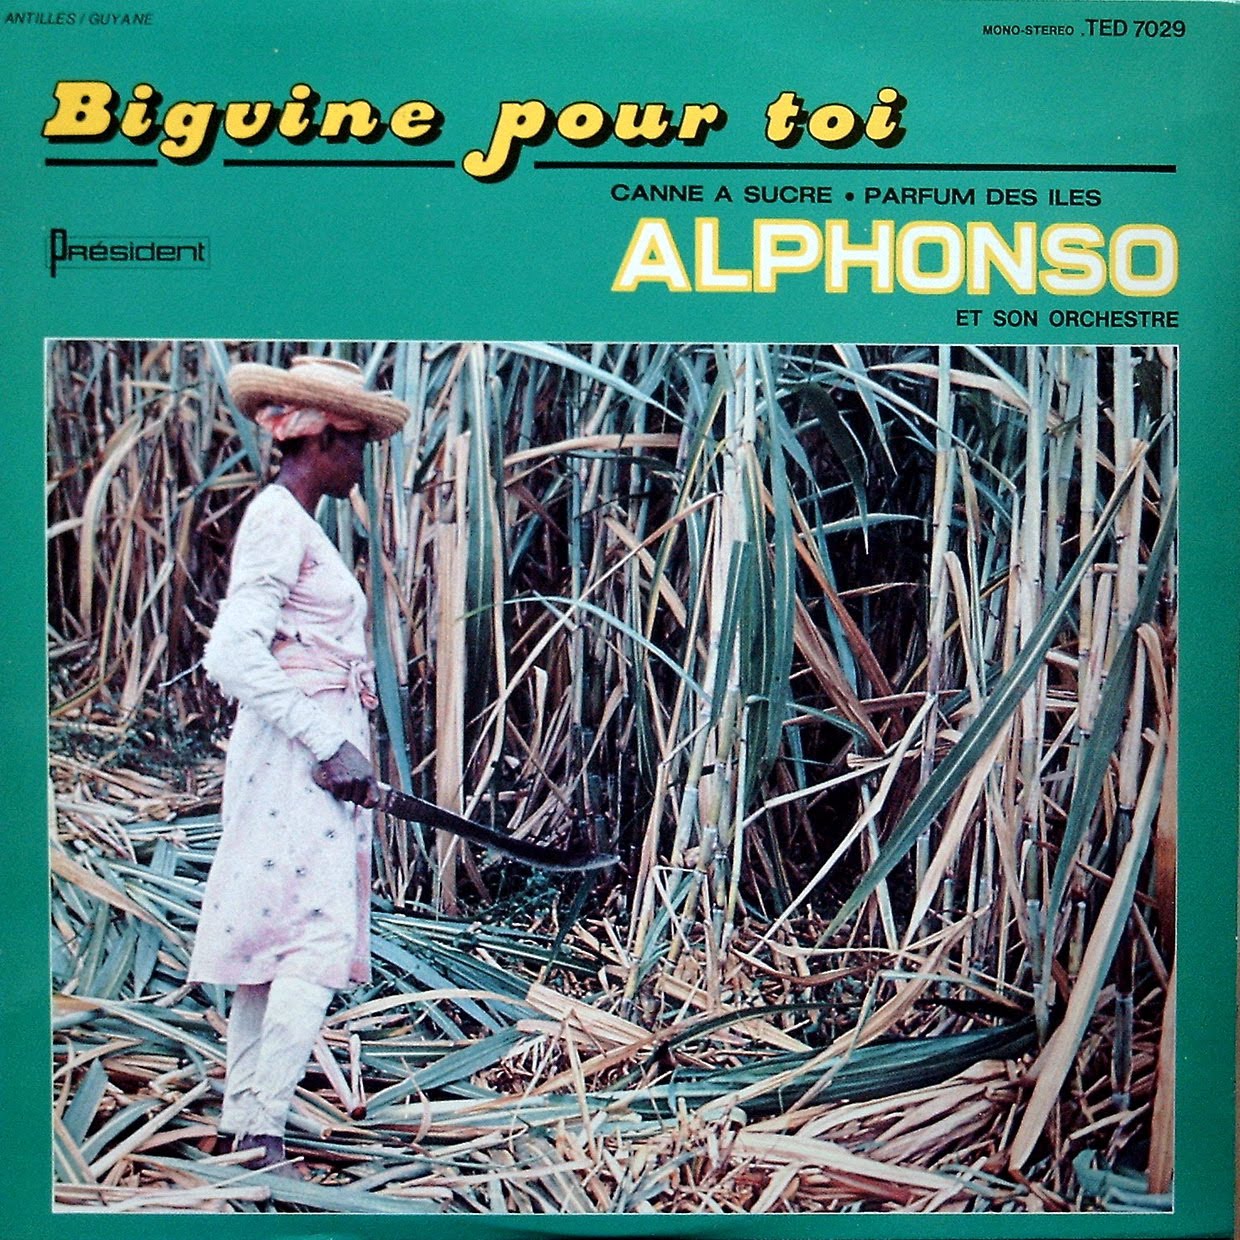  Alphonso - Biguine pour Toi (1960) (Vinil rip) Ted+7029